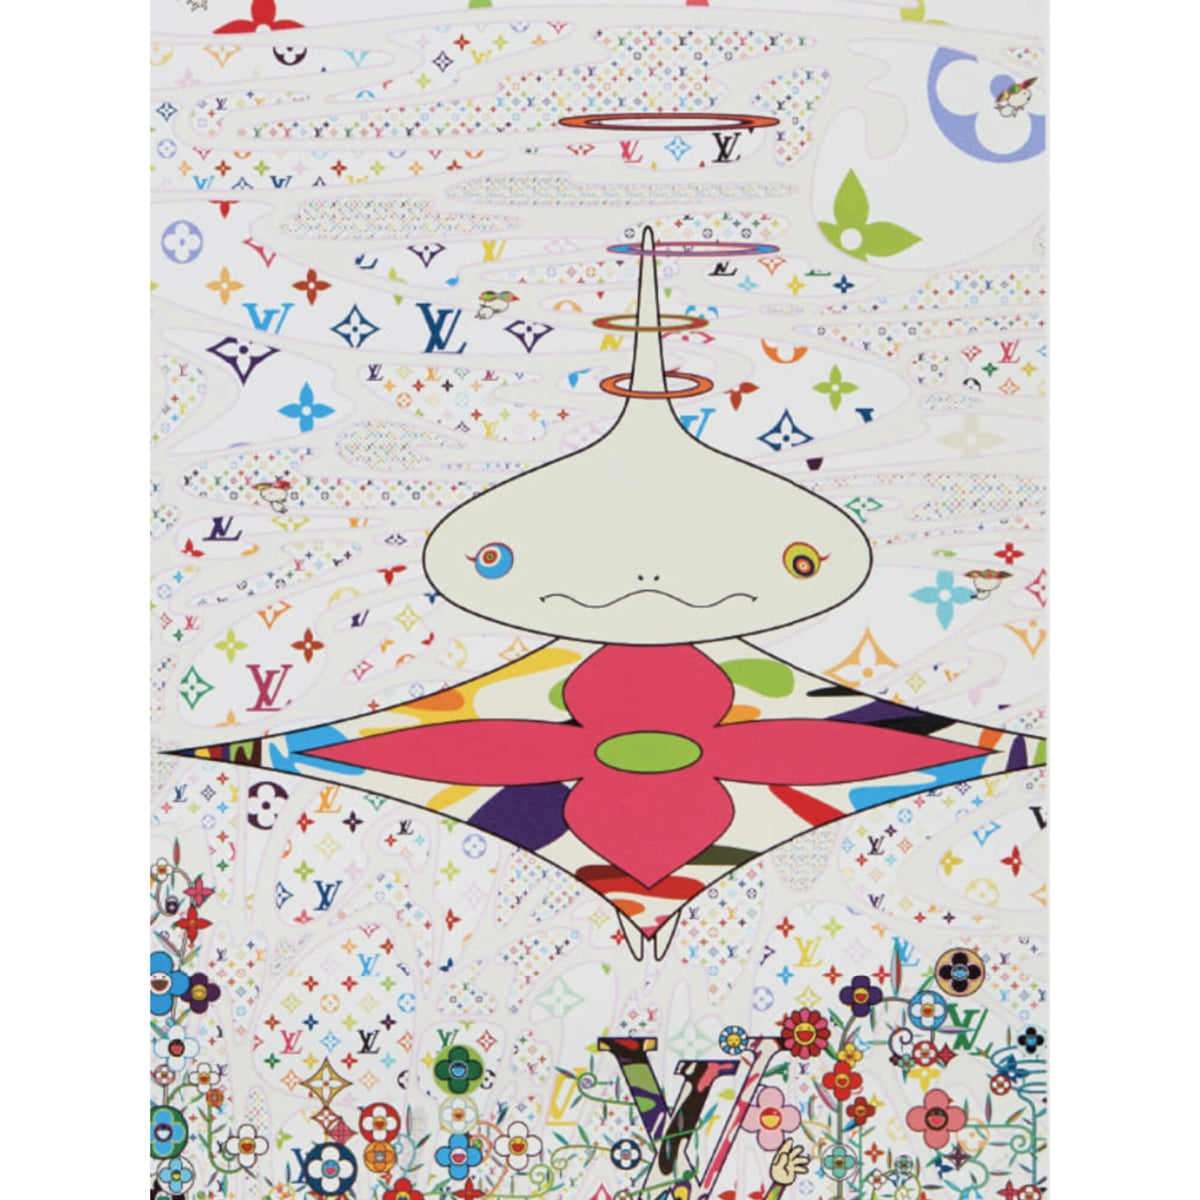 Sold at Auction: Takashi Murakami, Murakami Louis Vuitton Monogram  Screenprint